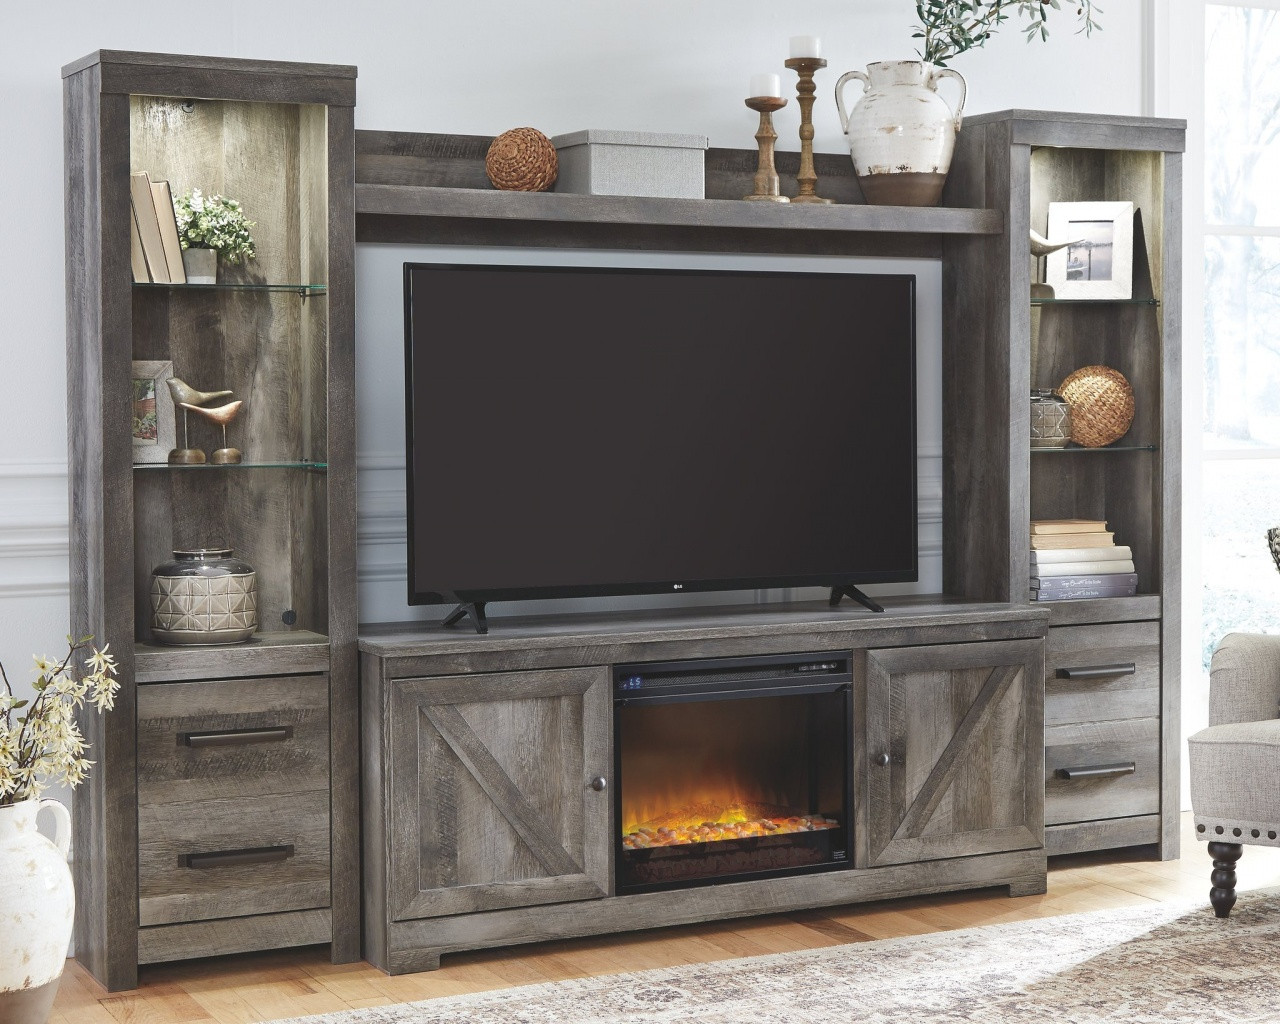 Electric Fireplace Tv Stand Menards
 Menards Electric Fireplace Tv Stands – FIREPLACE IDEAS